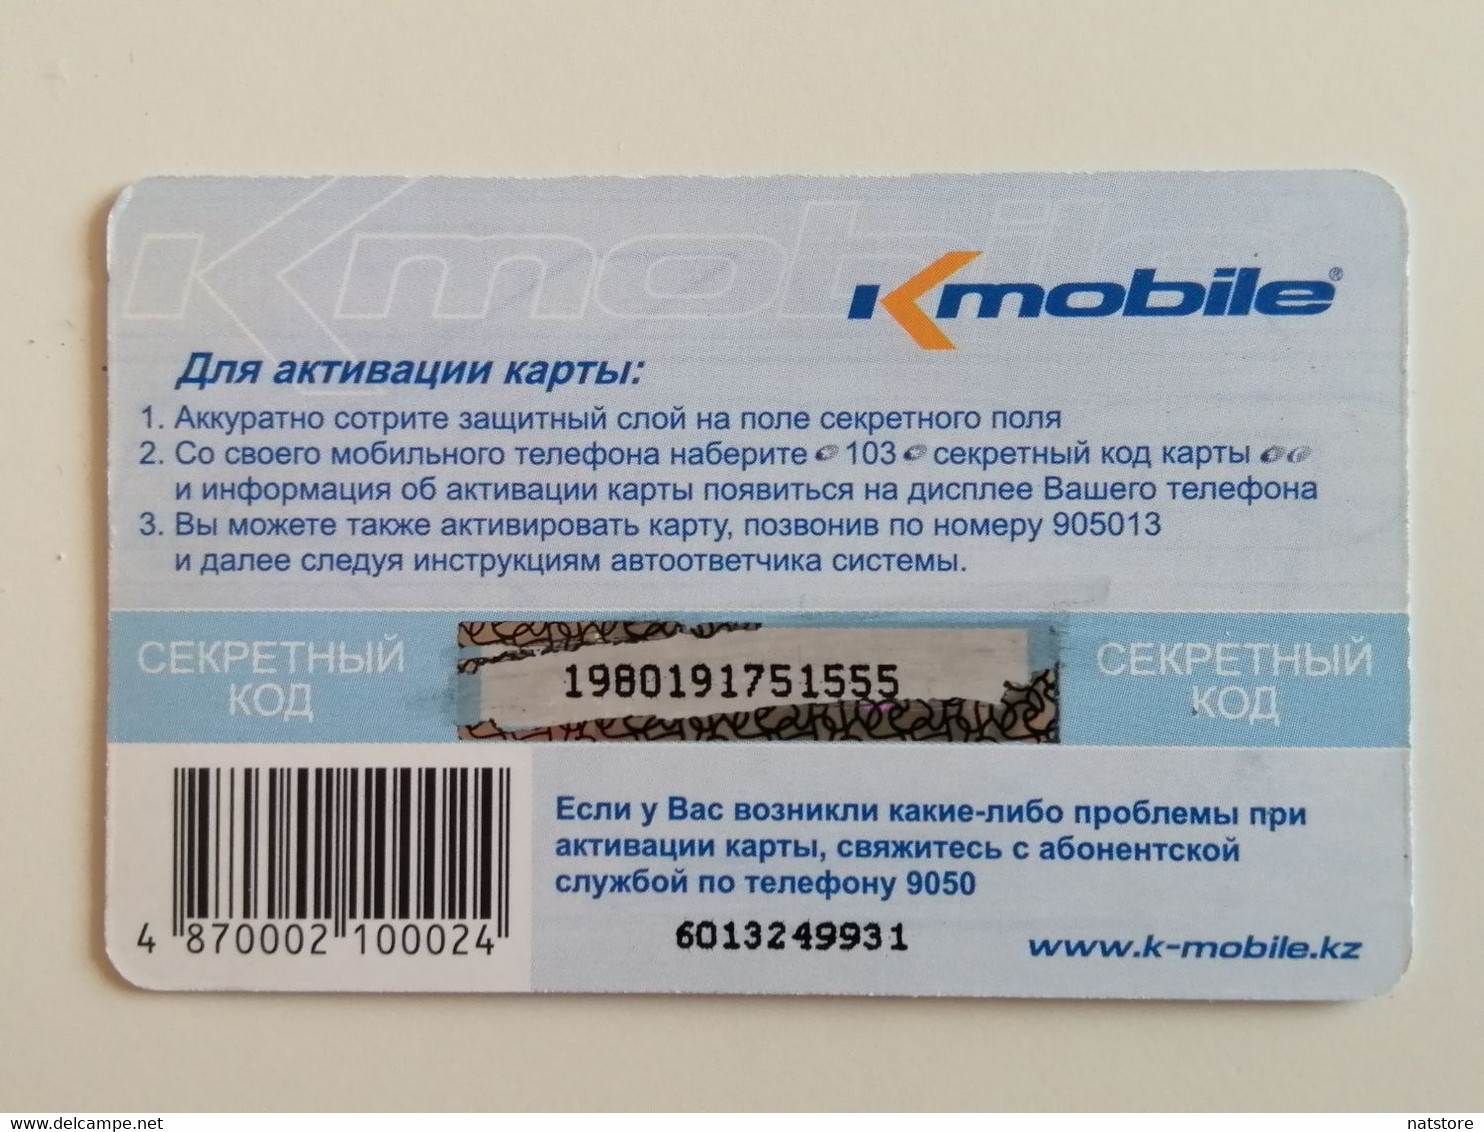 KAZAKHSTAN..PHONECARD..K-MOBILE...1000 - Telecom